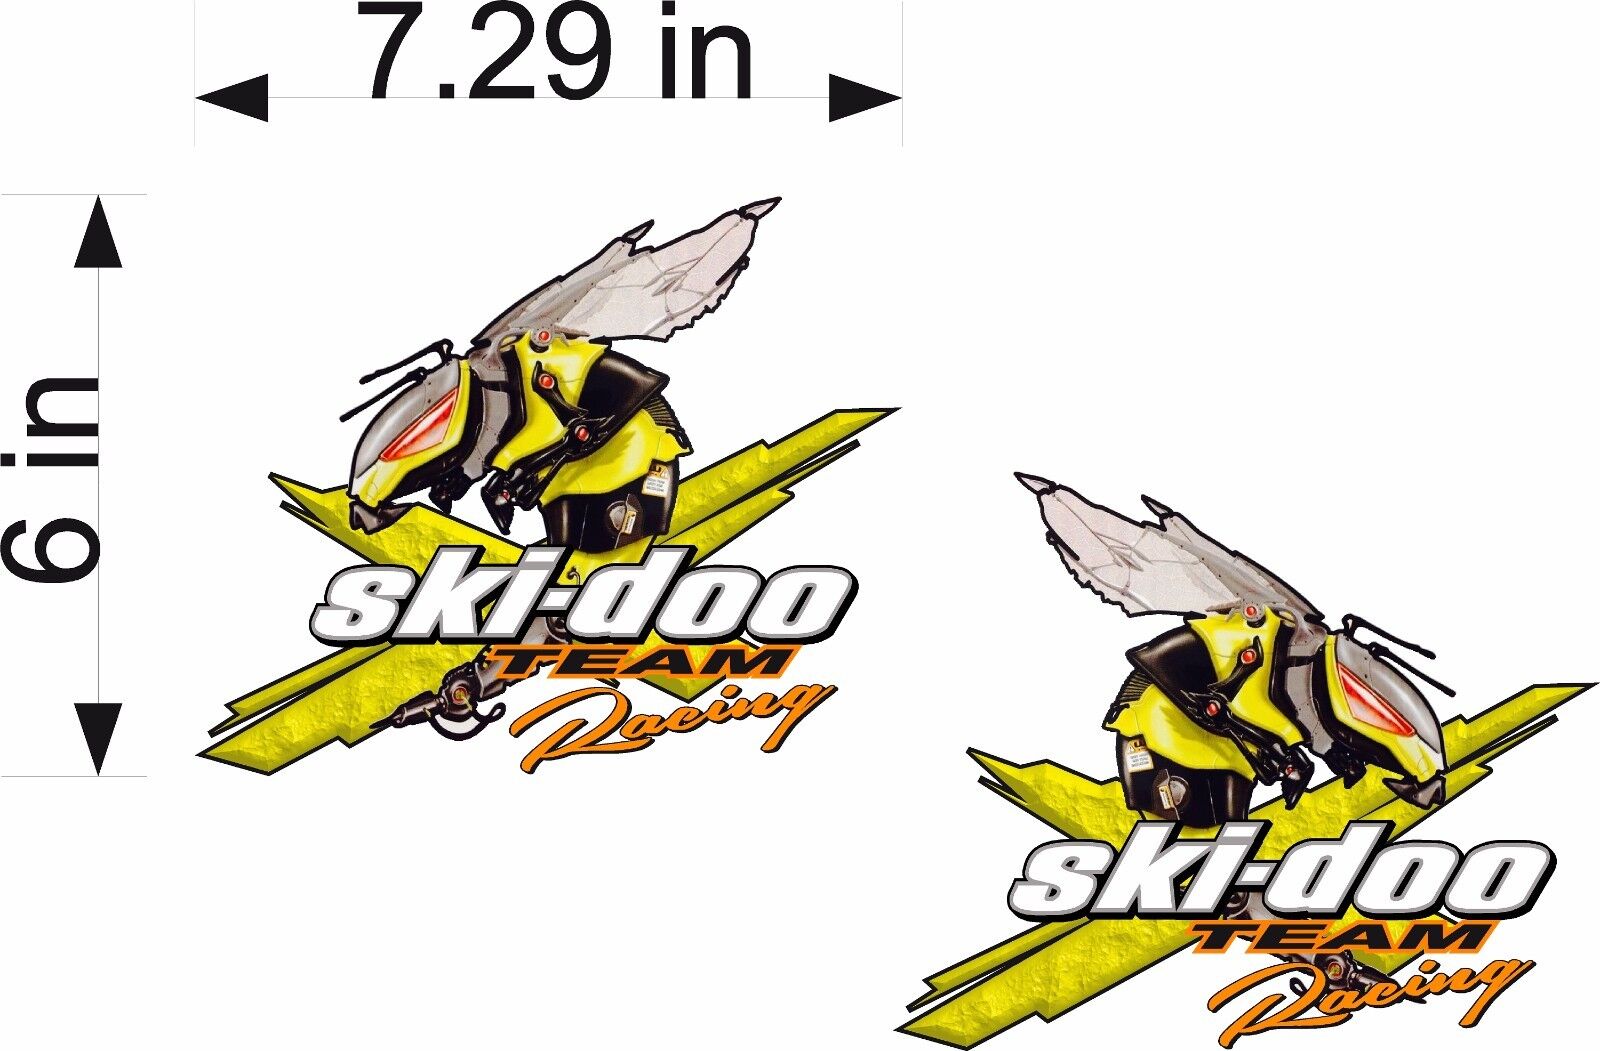 SKI-DOO Techno Bee Racing / PAIR / Vinyl Vehicle Snowmobile Gear Graphic Decals